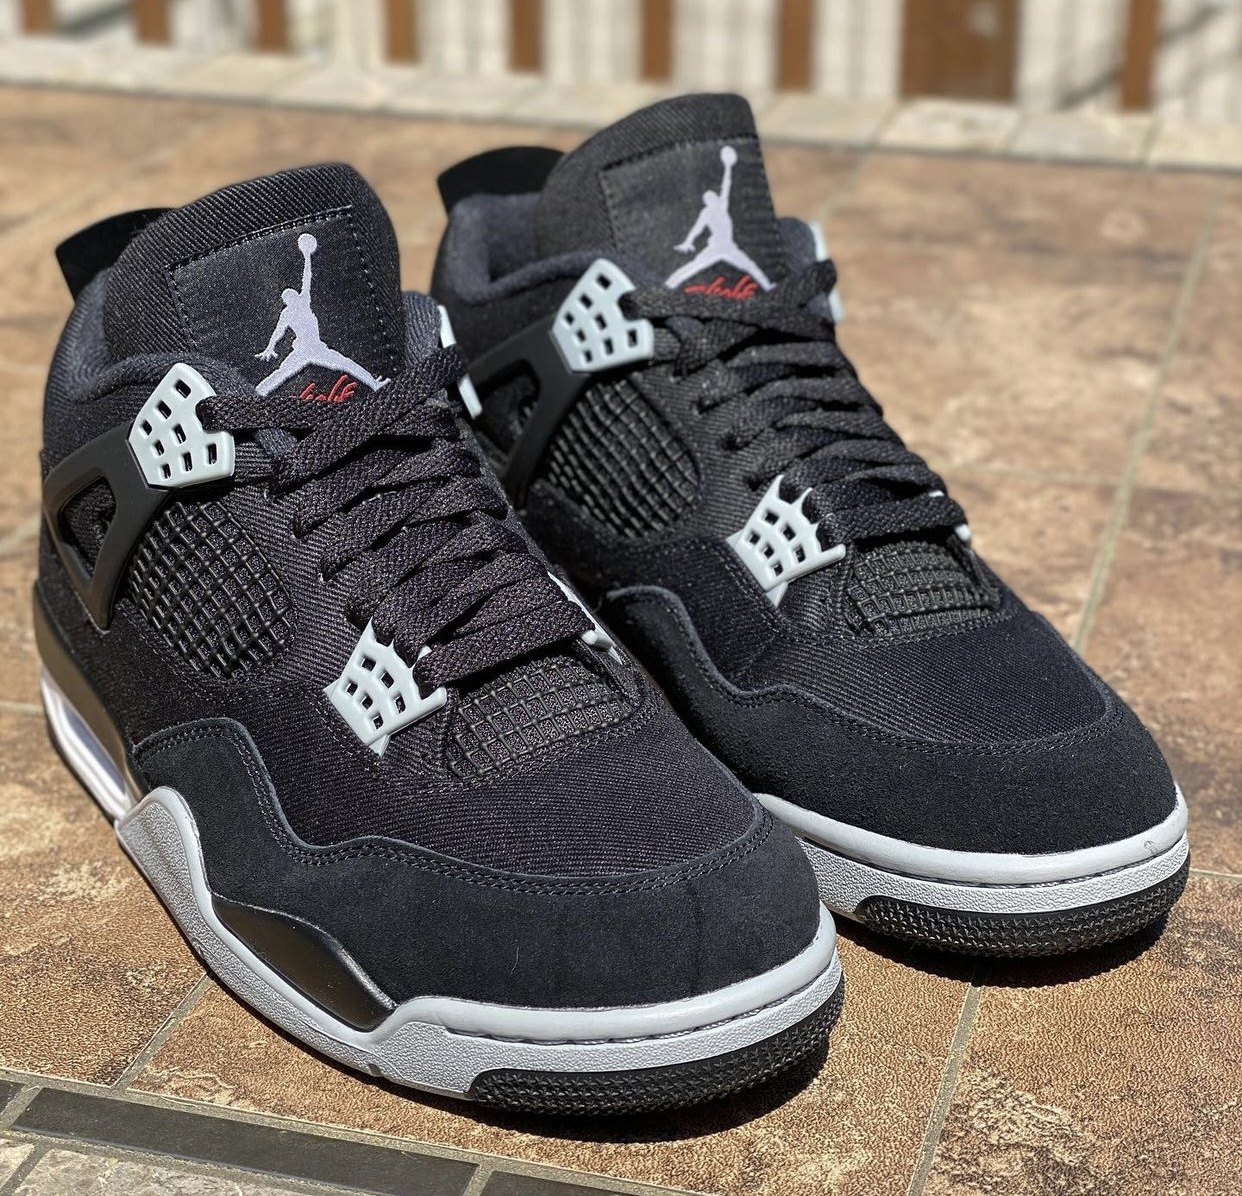 Air Jordan 4 Retro "Black Canvas" Release Pushed Back Sneaker Buzz